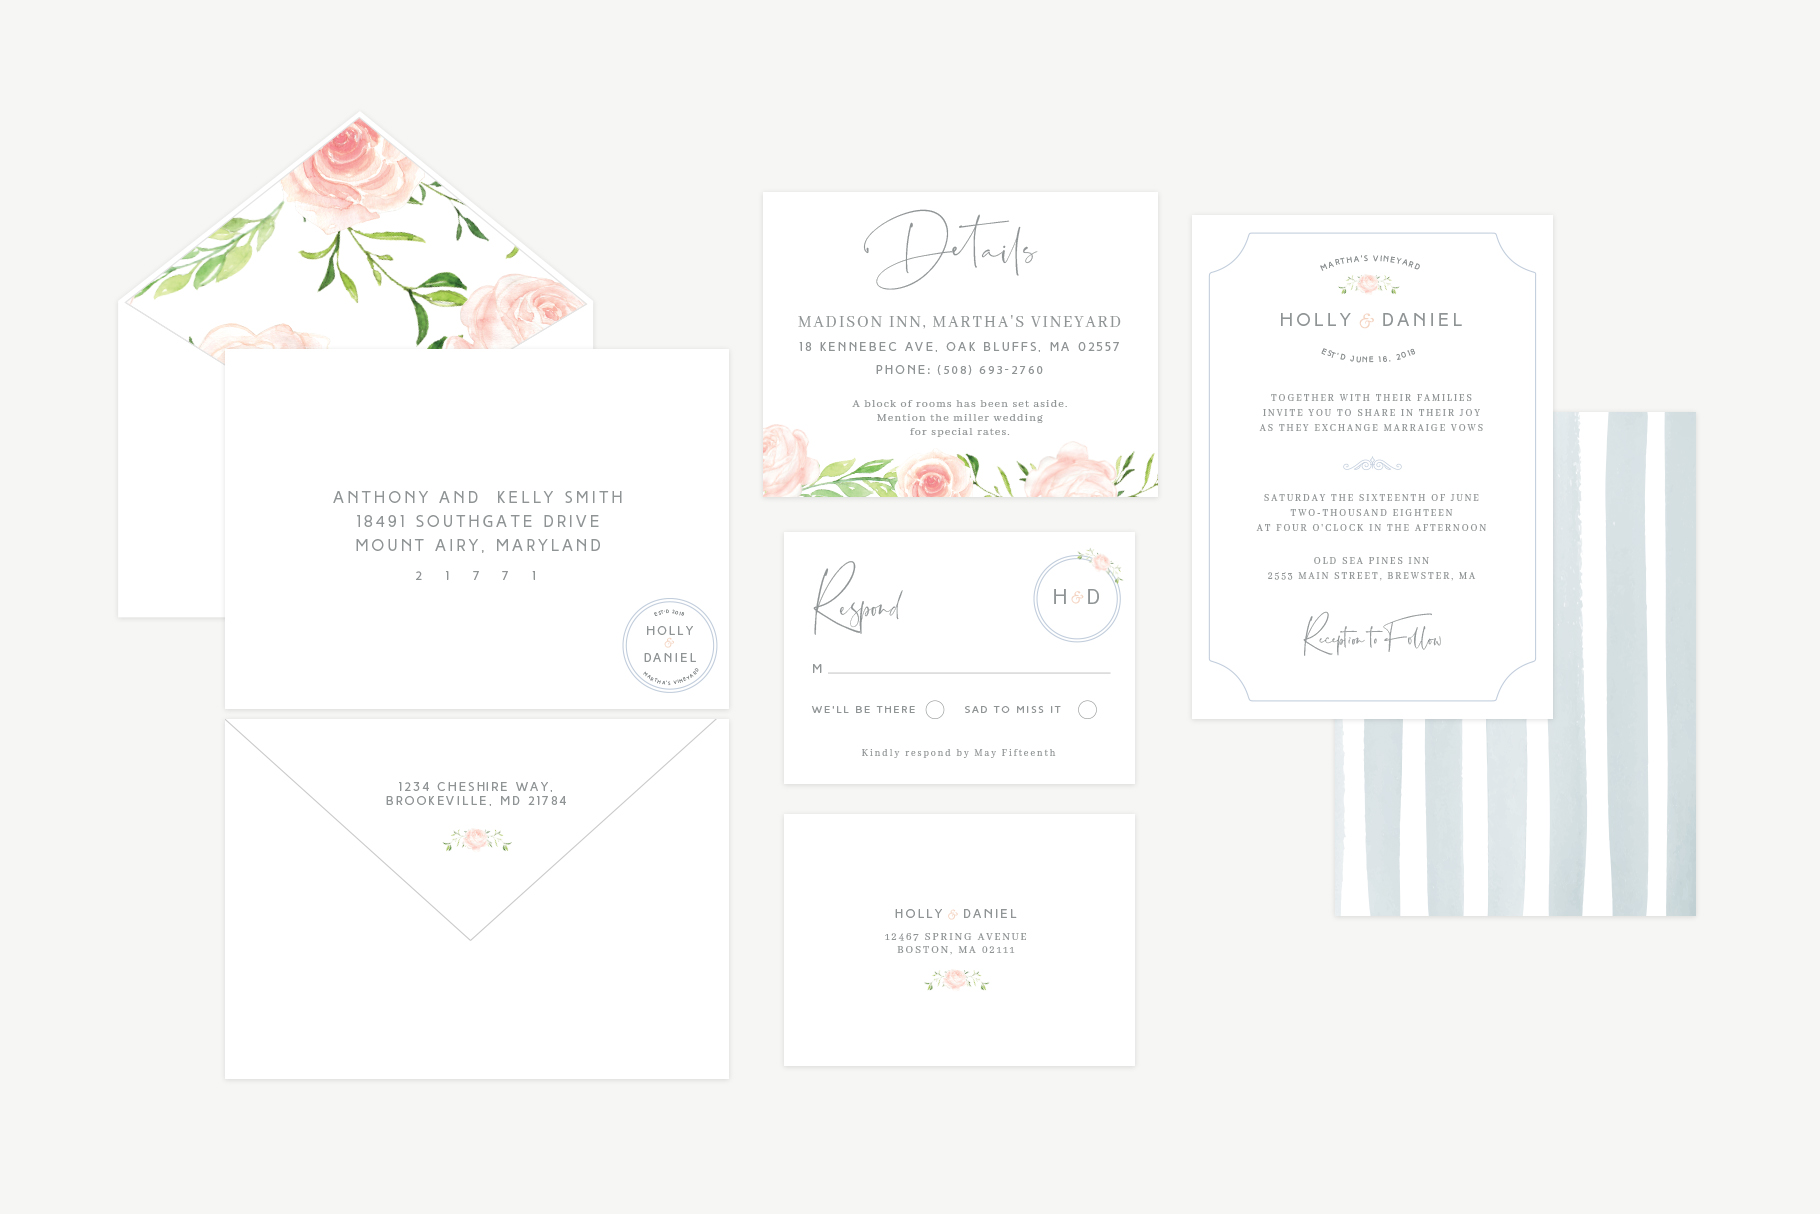 wedding invitations / wedding brand / wedding logo / wedding monogram / wedding invite suite / custom wedding / wedding theme / wedding inspiration / wedding ideas / color palette / wedding design